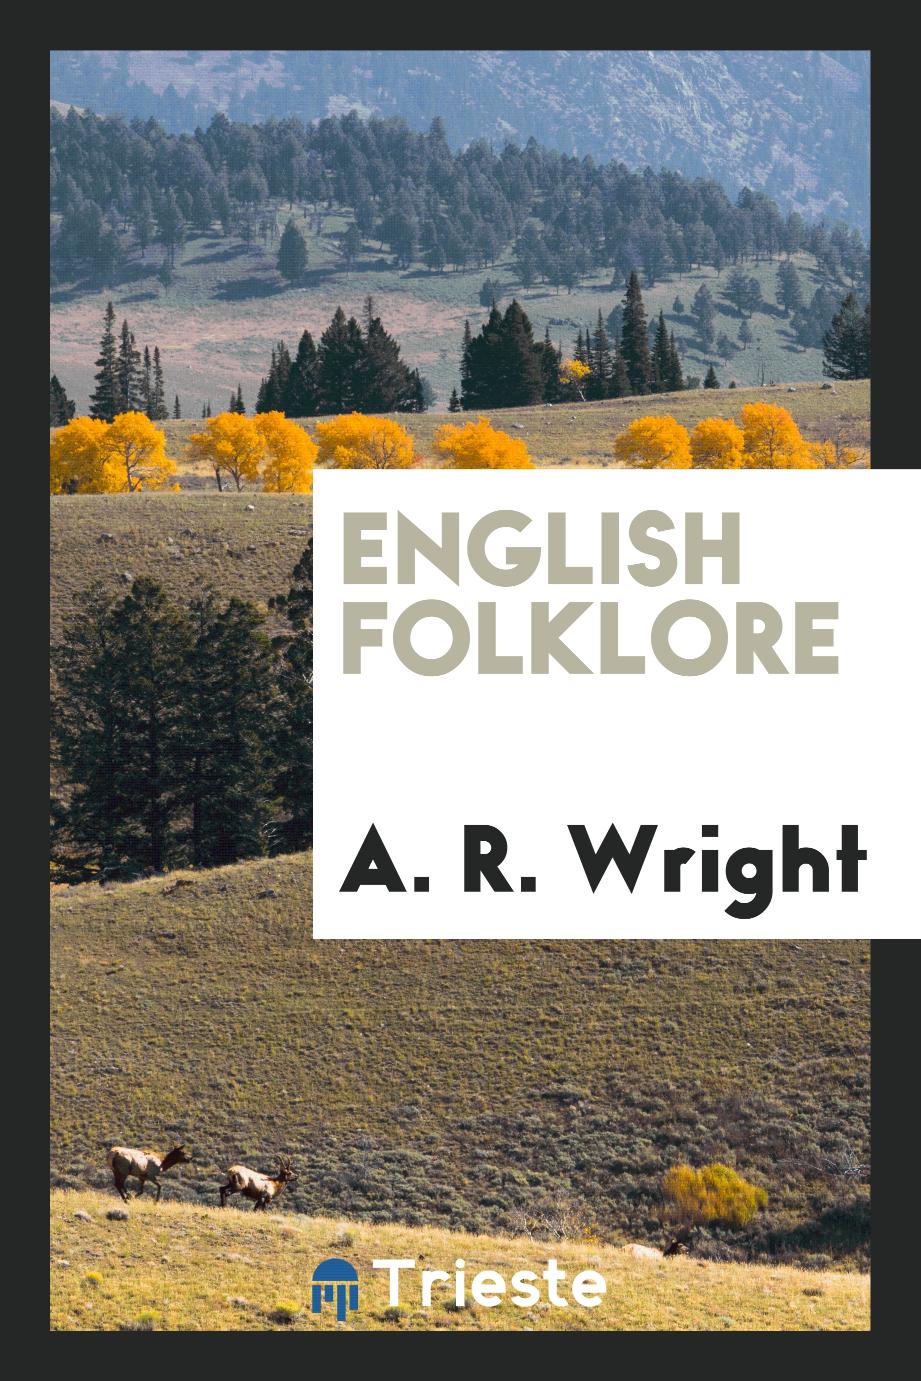 English folklore